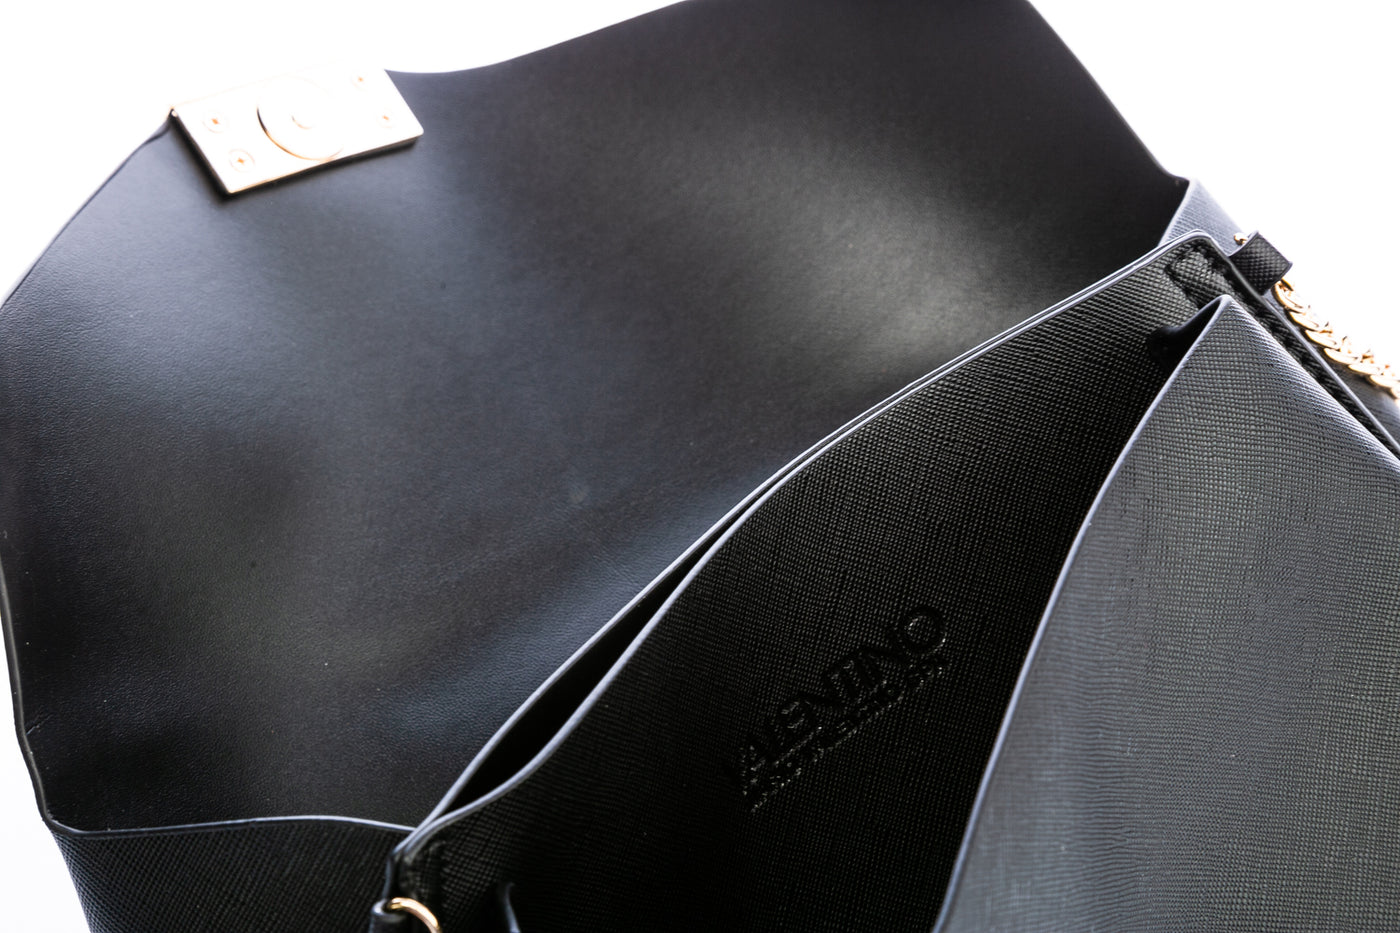 Valentino by Mario Valentino Arpie Ladies Clutch Bag in Black